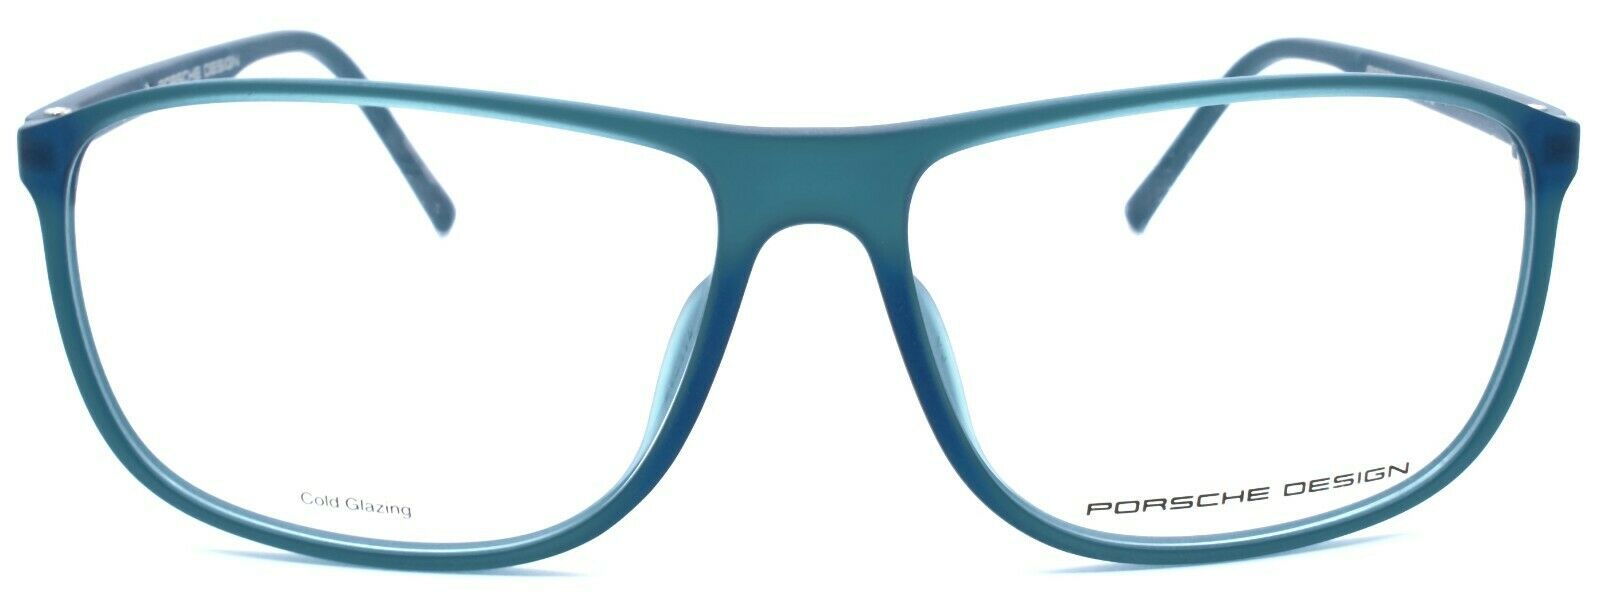 2-Porsche Design P8278 B Eyeglasses Frames 58-14-145 Turquoise-4046901901370-IKSpecs